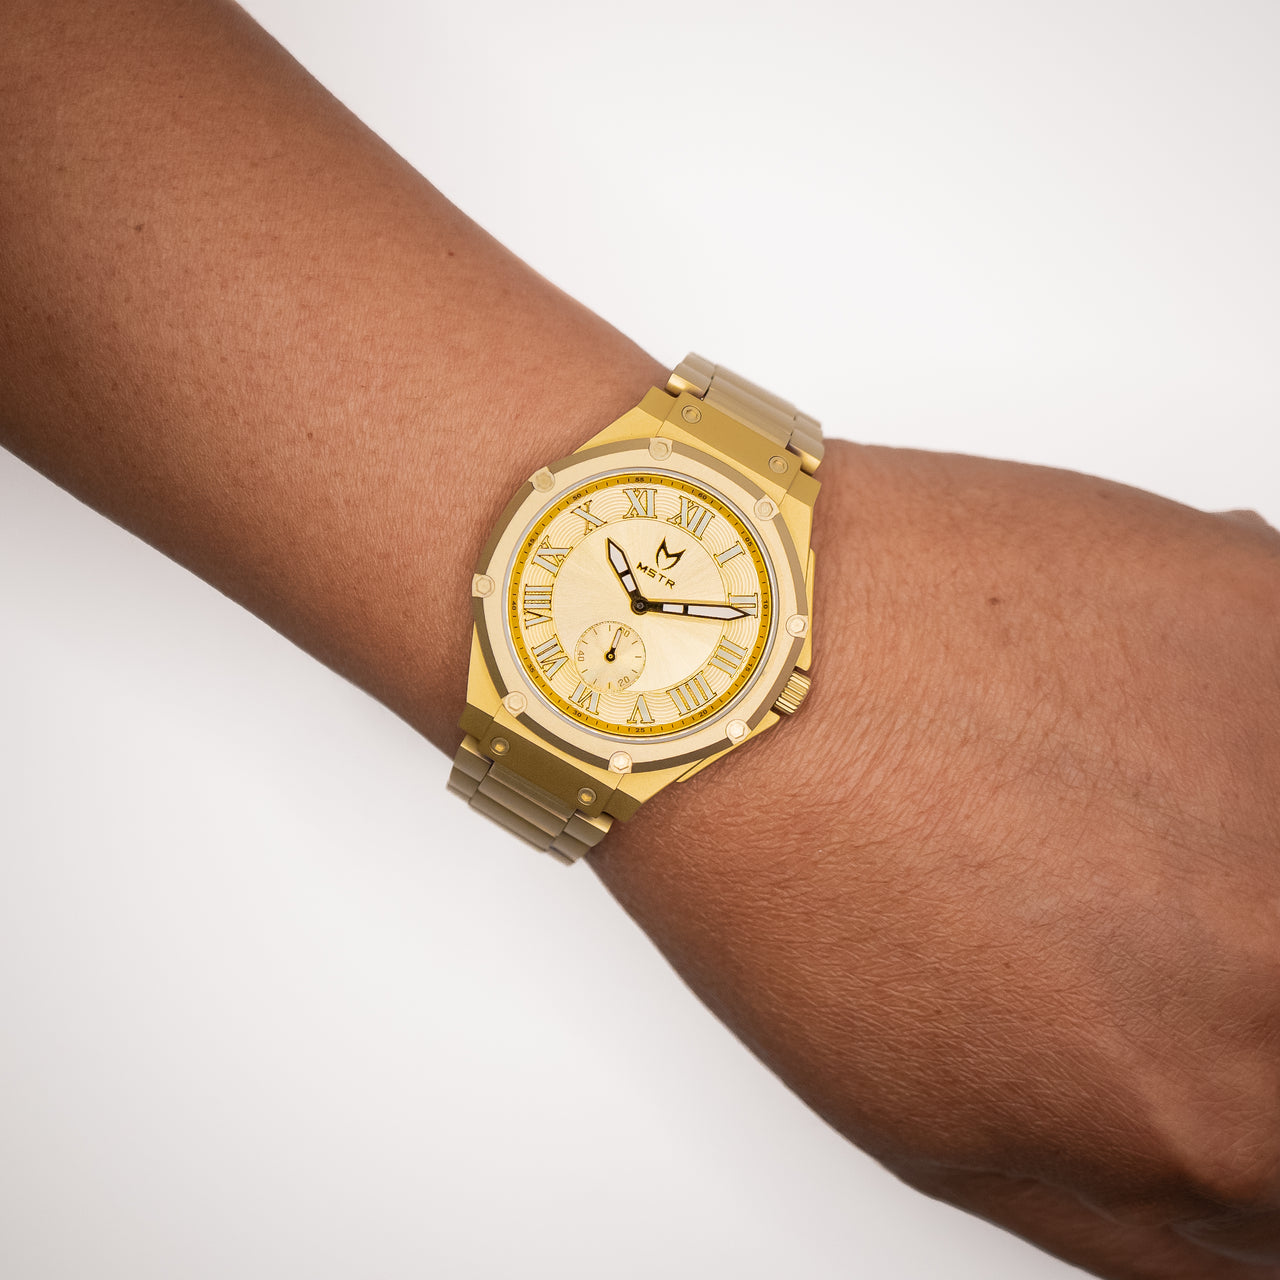 MSTR Ambassador Ultra Slim AU141MV2 gold watch on models wrist